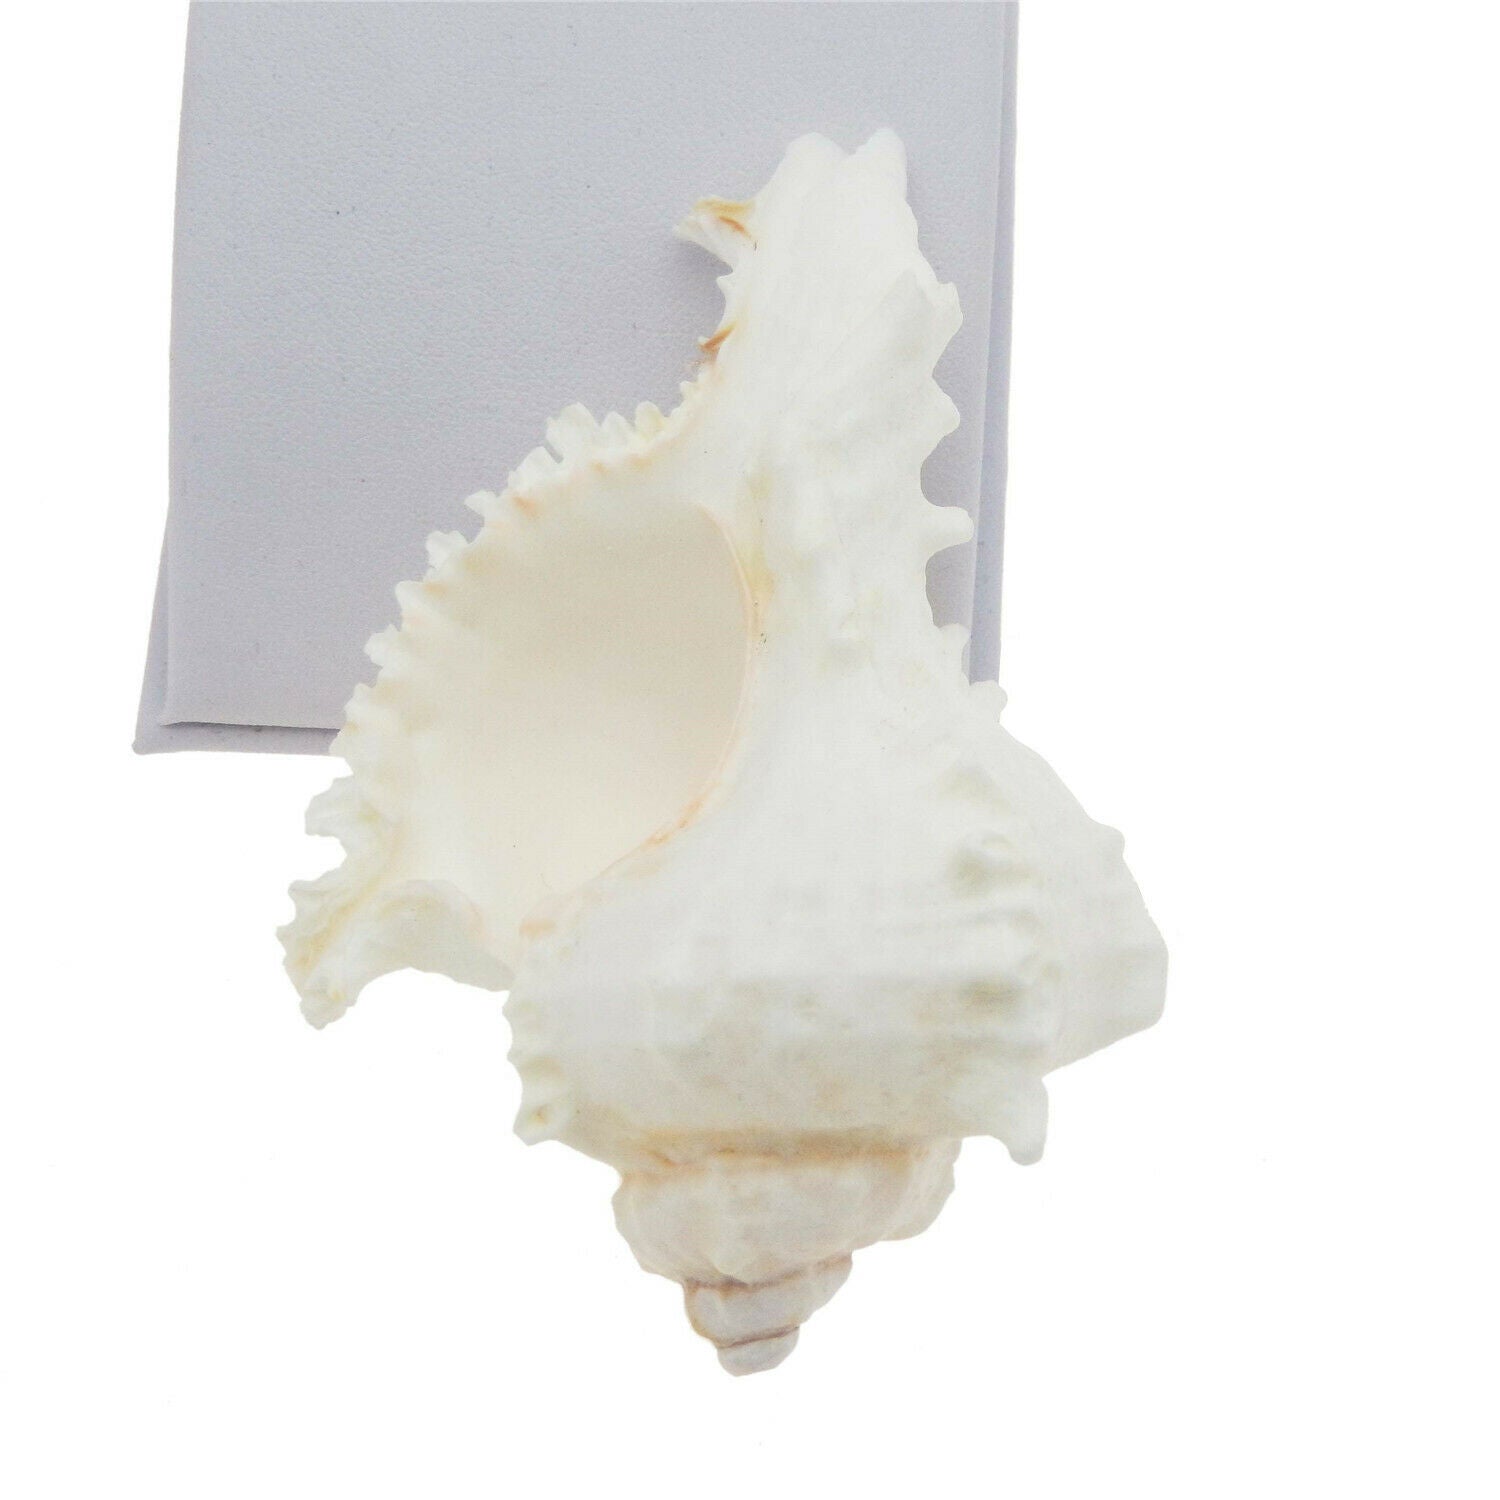 1 Piece Natural Shells 6 - 7 cm Snail Conch Ramose Murex Seashell Nautical Decor